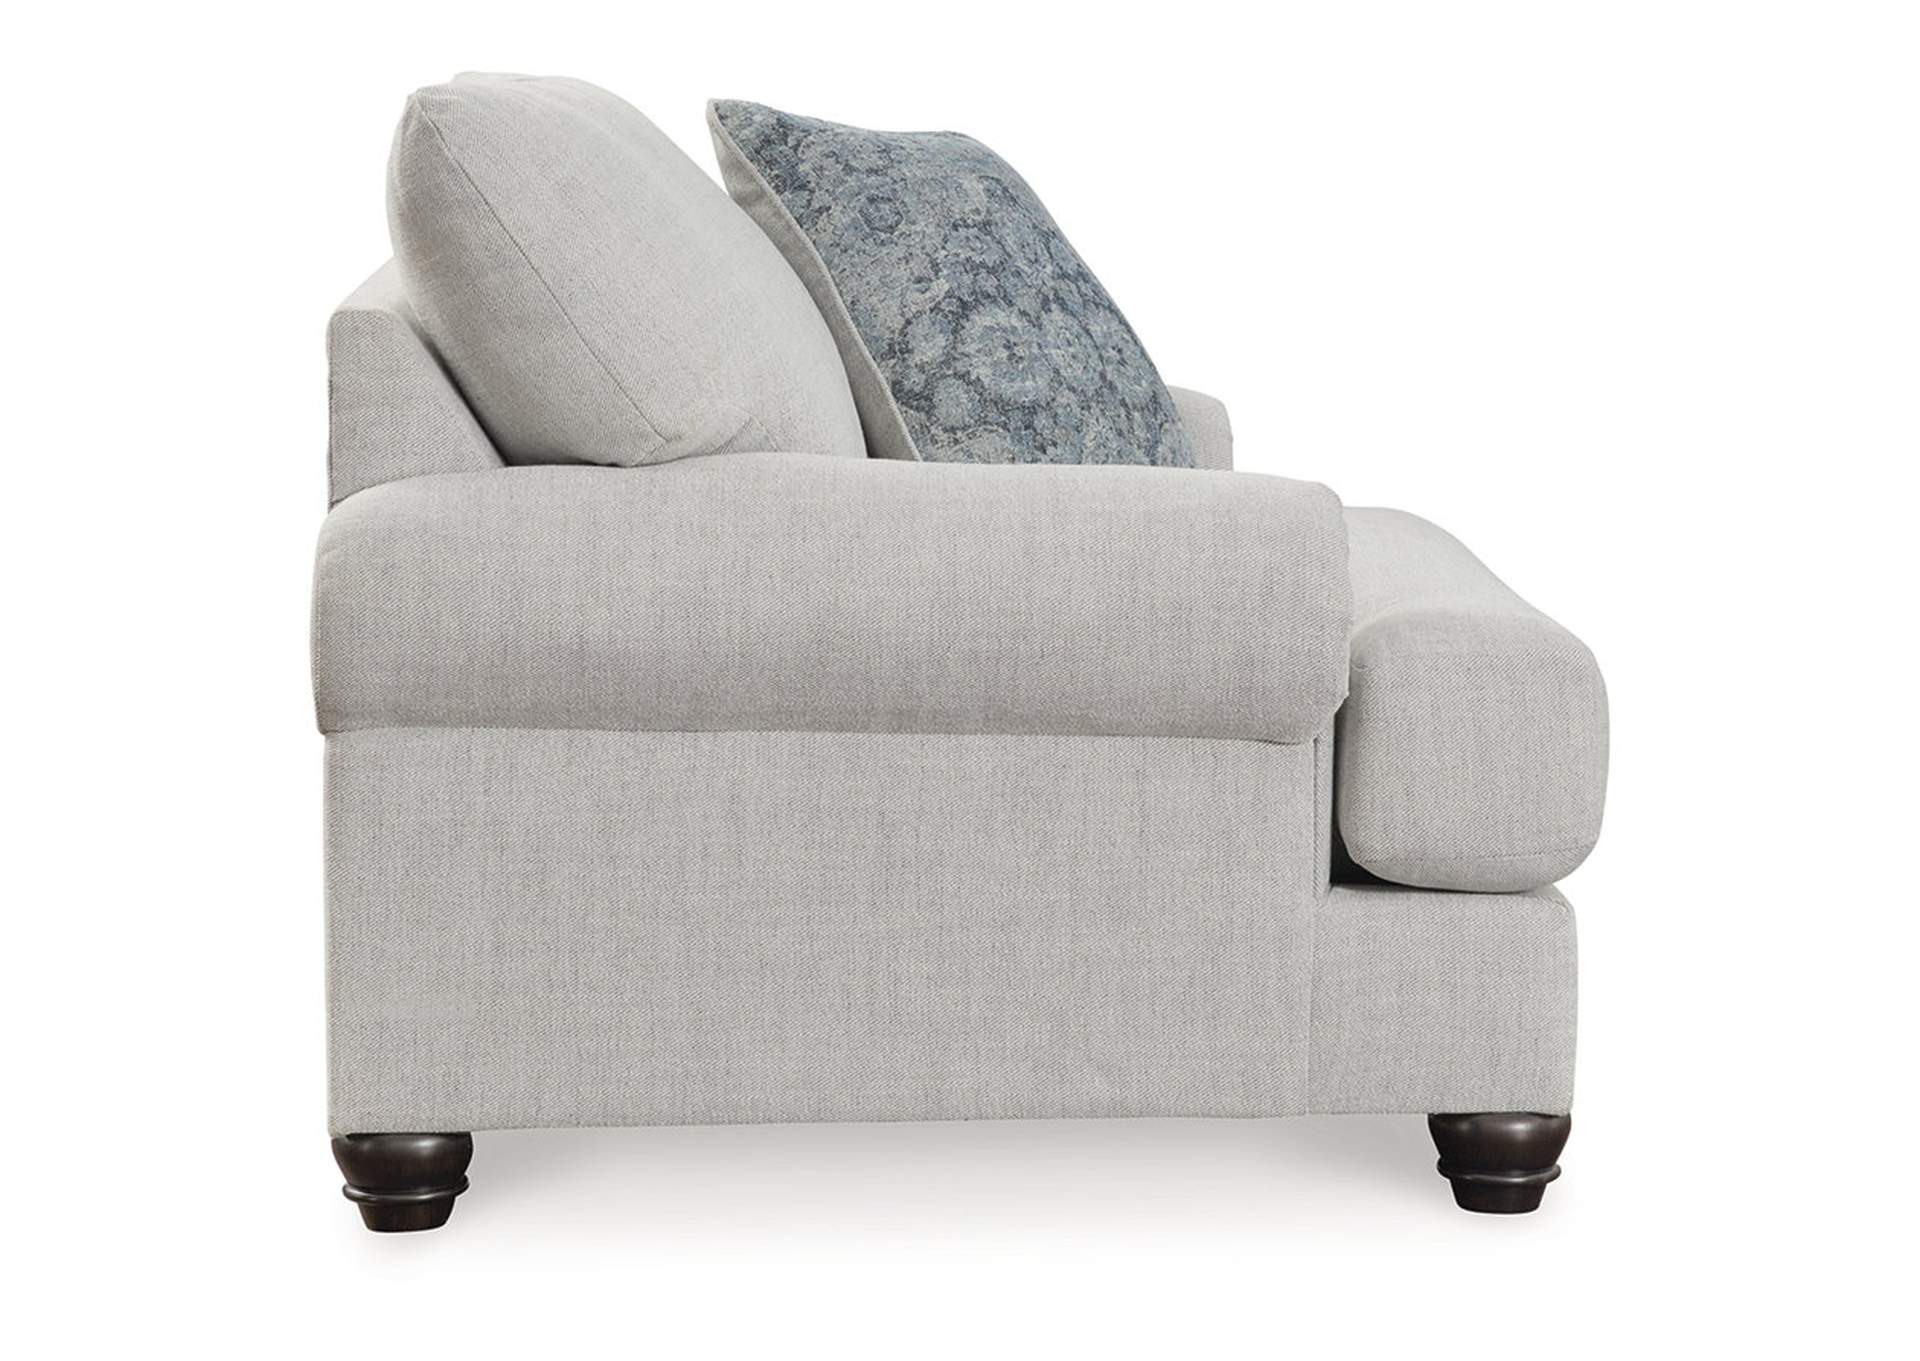 Avocet Sofa, Loveseat, Oversized Chair and Ottoman,Millennium